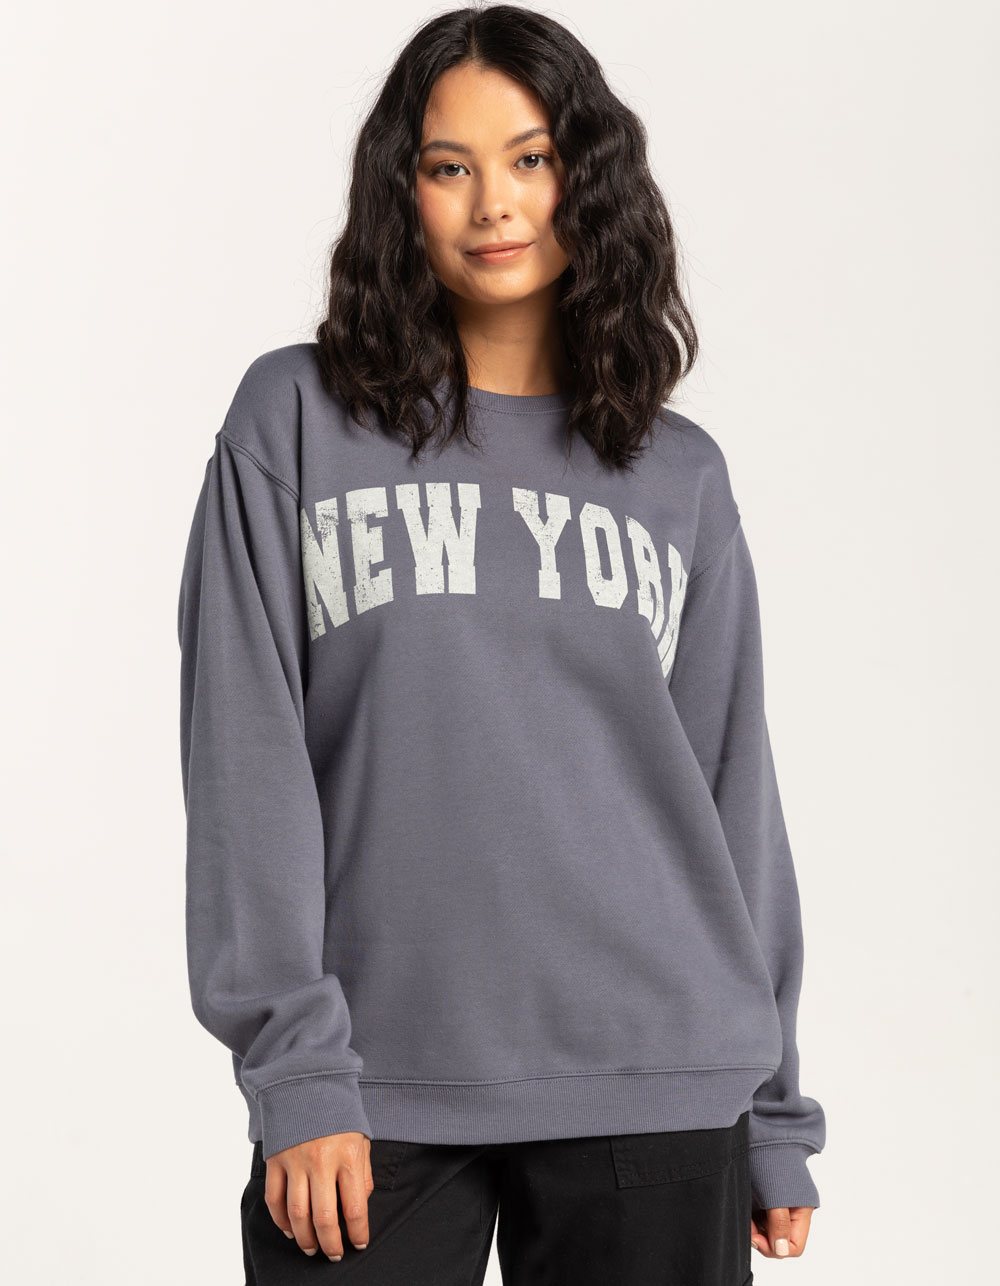 Rsq New York Crewneck Sweatshirt - Blue - Small